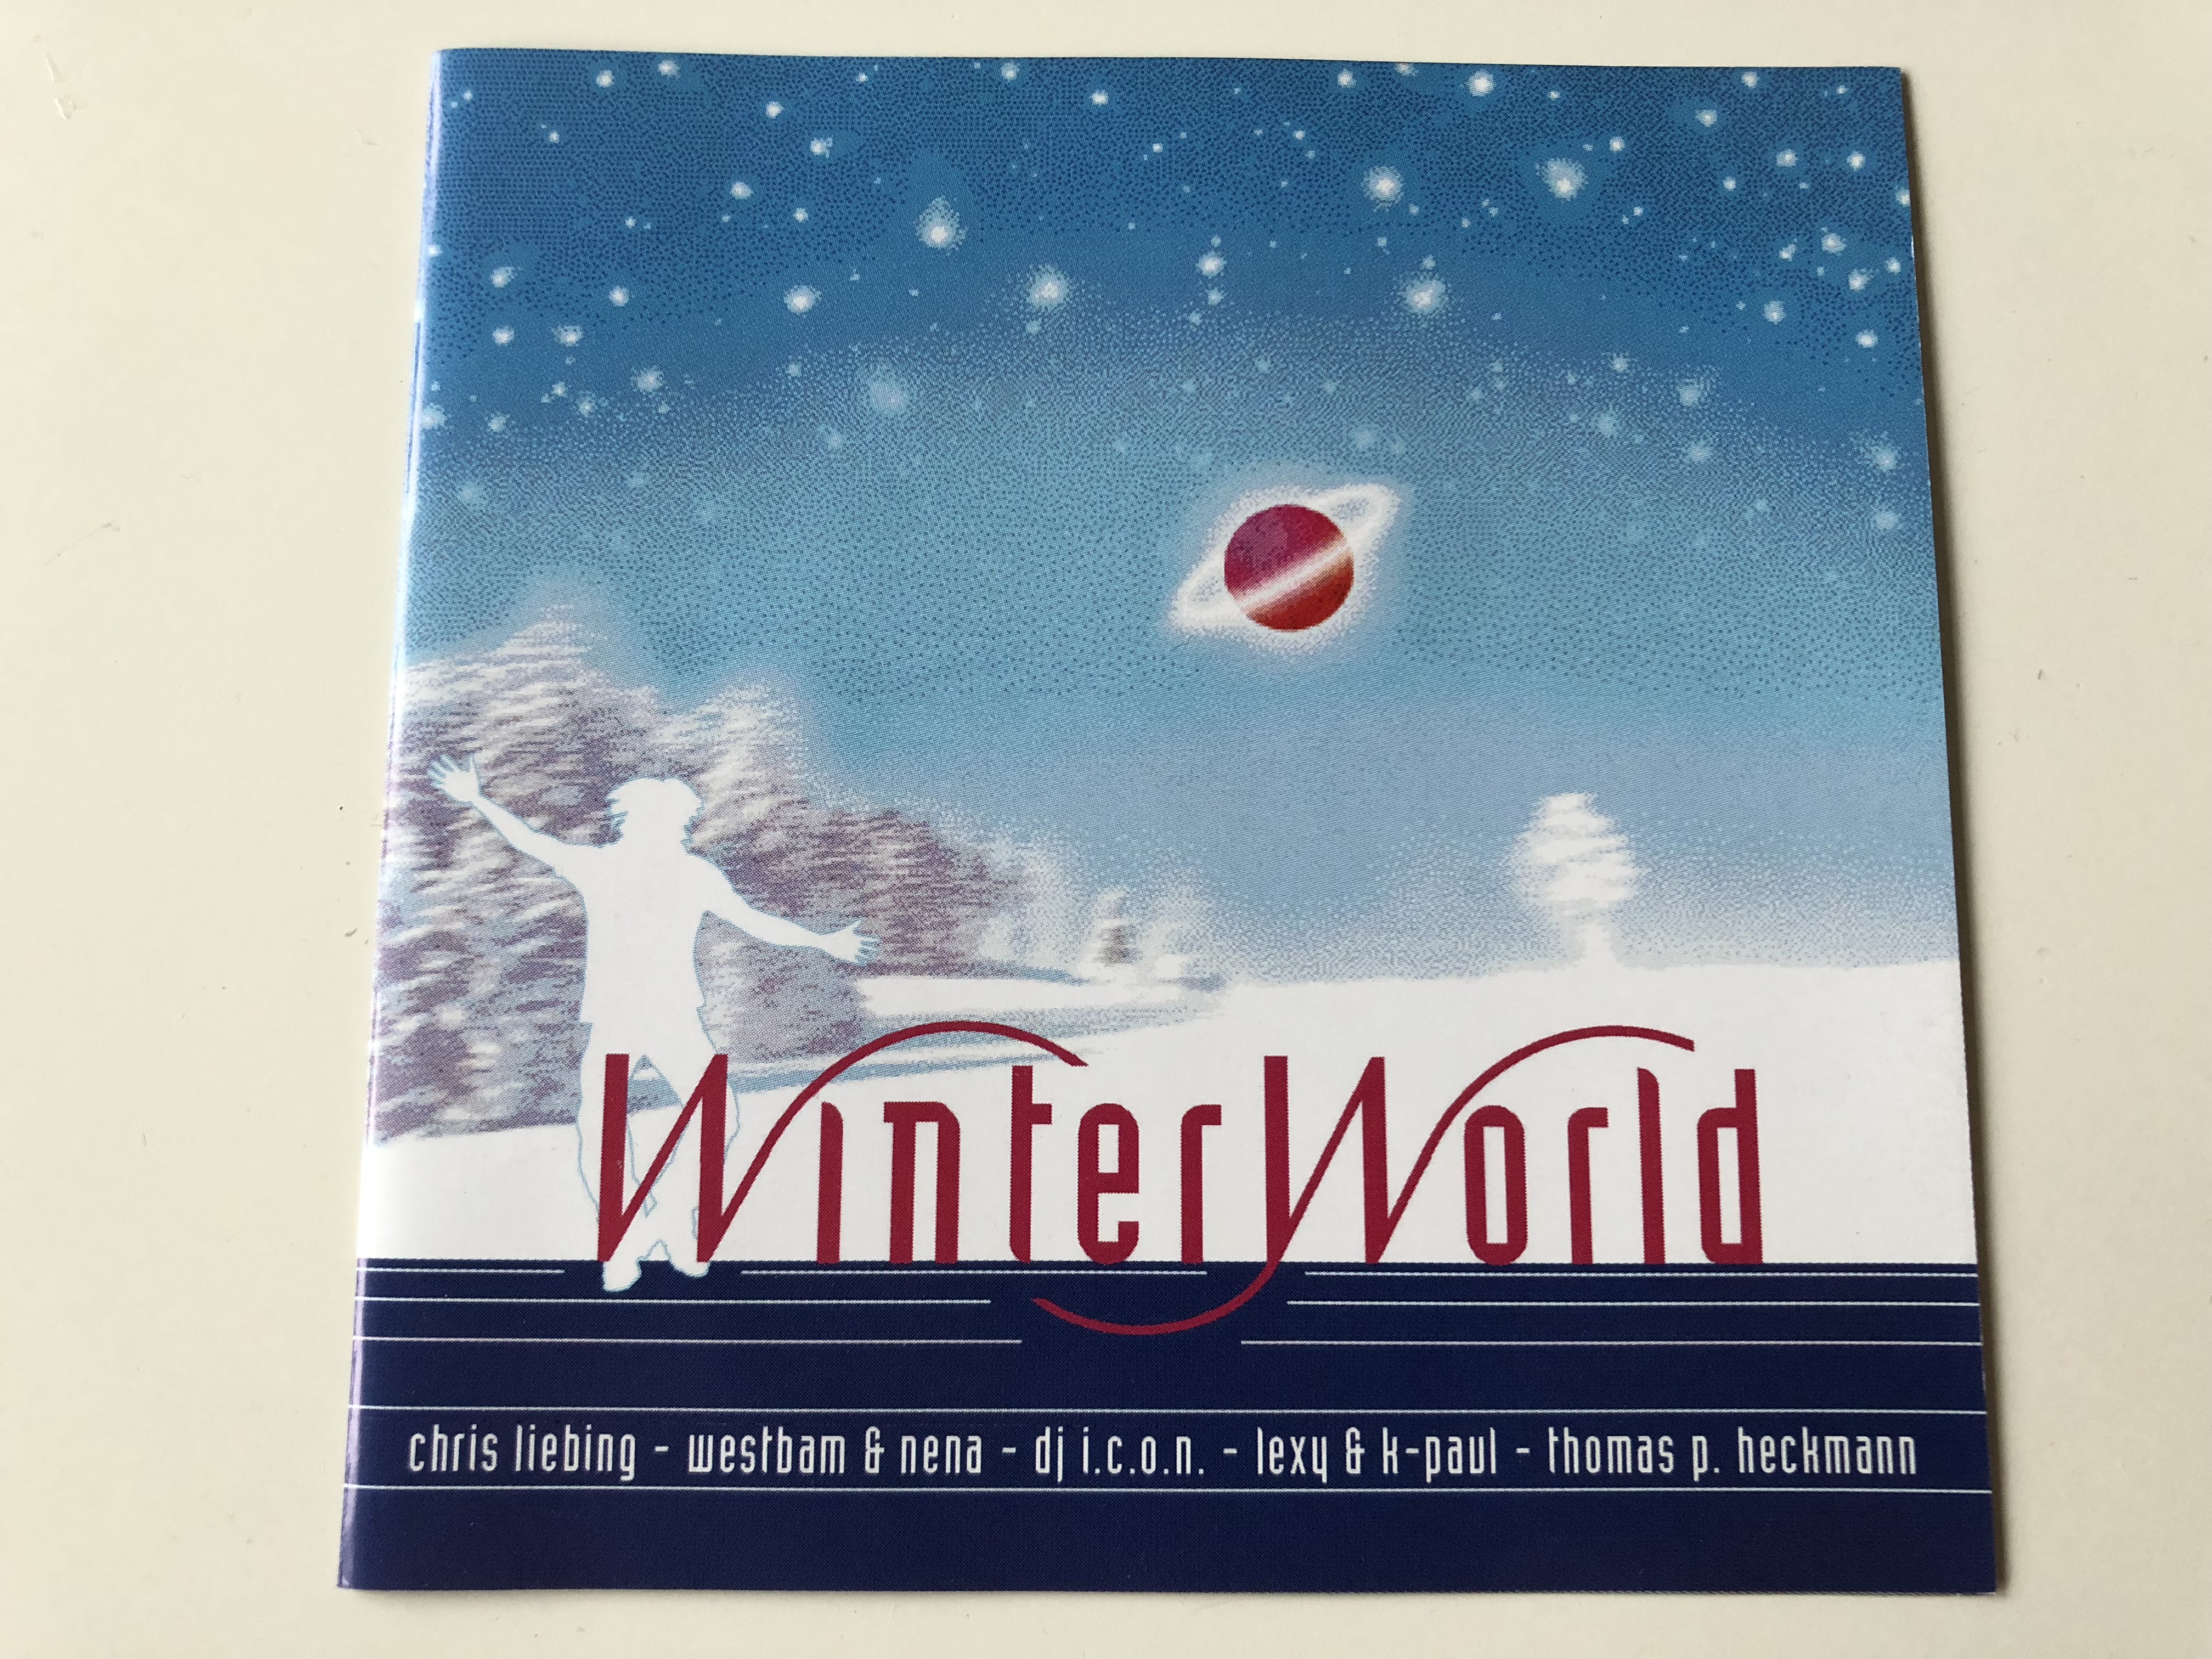 winterworld-chris-liebing-westbam-nena-dj.-i.c.on.-lexy-k-paul-thomas-p.-heckmann-audio-cd-2002-zyx-music-1-.jpg